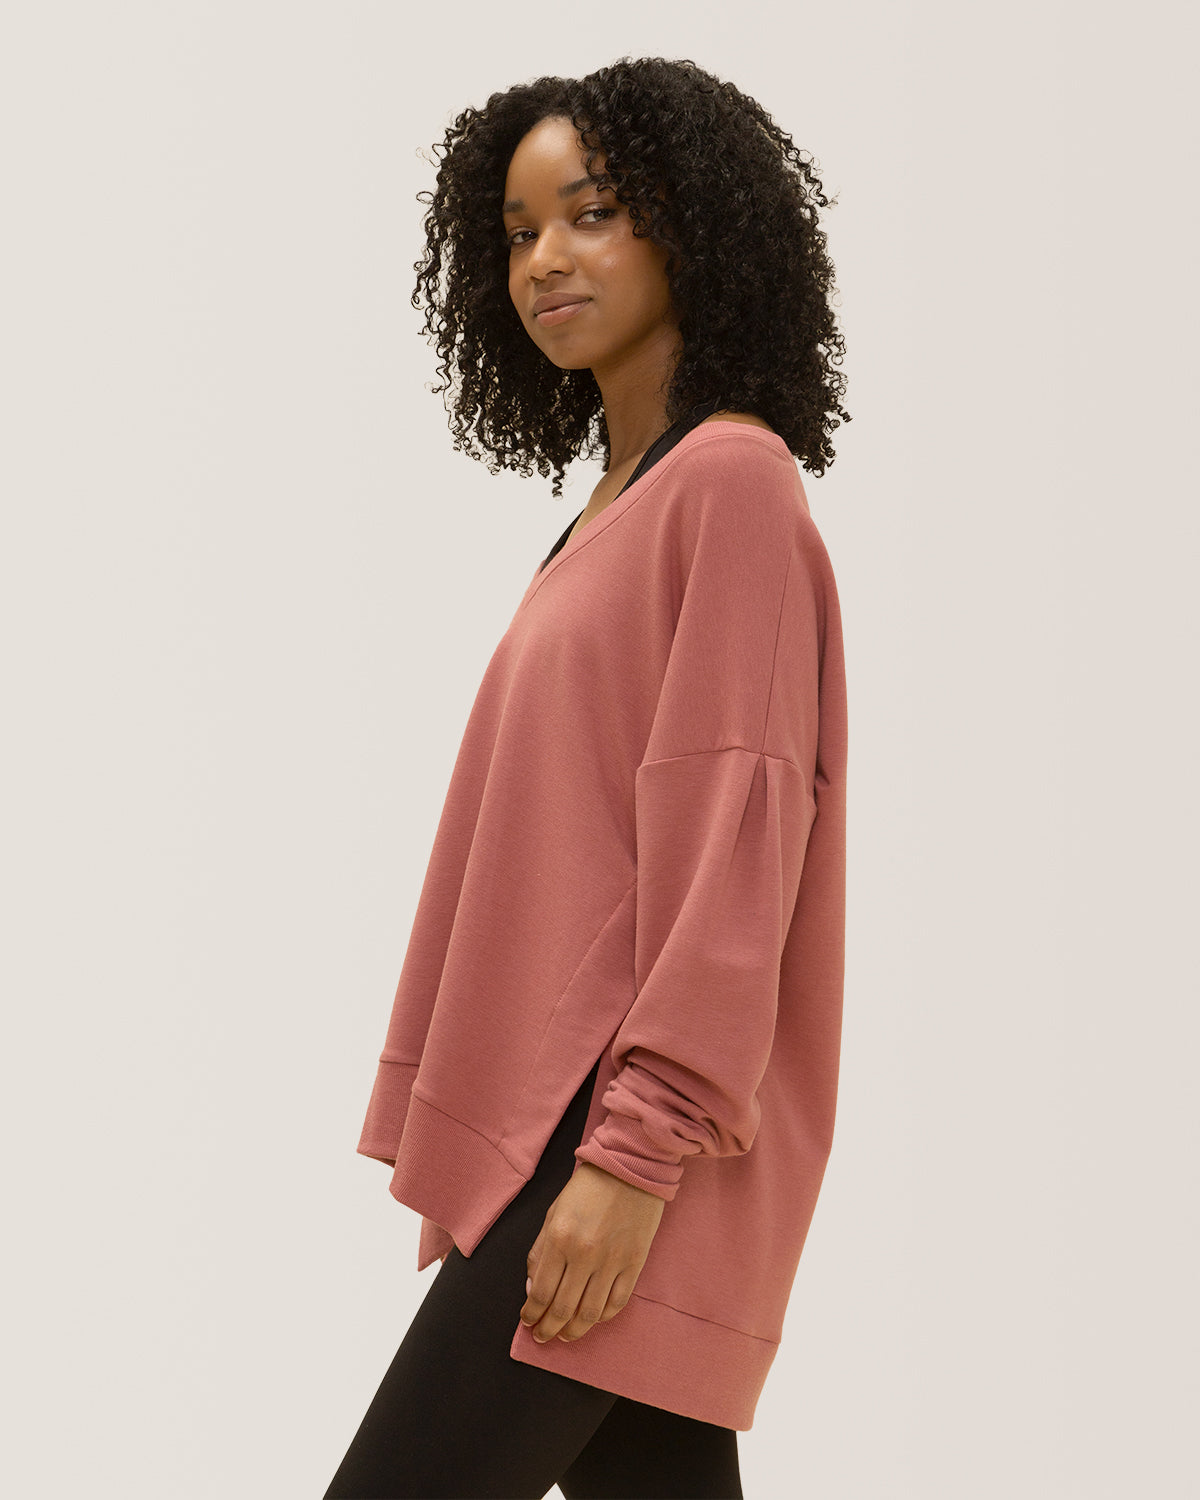 Forillon Sweatshirt - Rose Boreal - Blush / Rosée